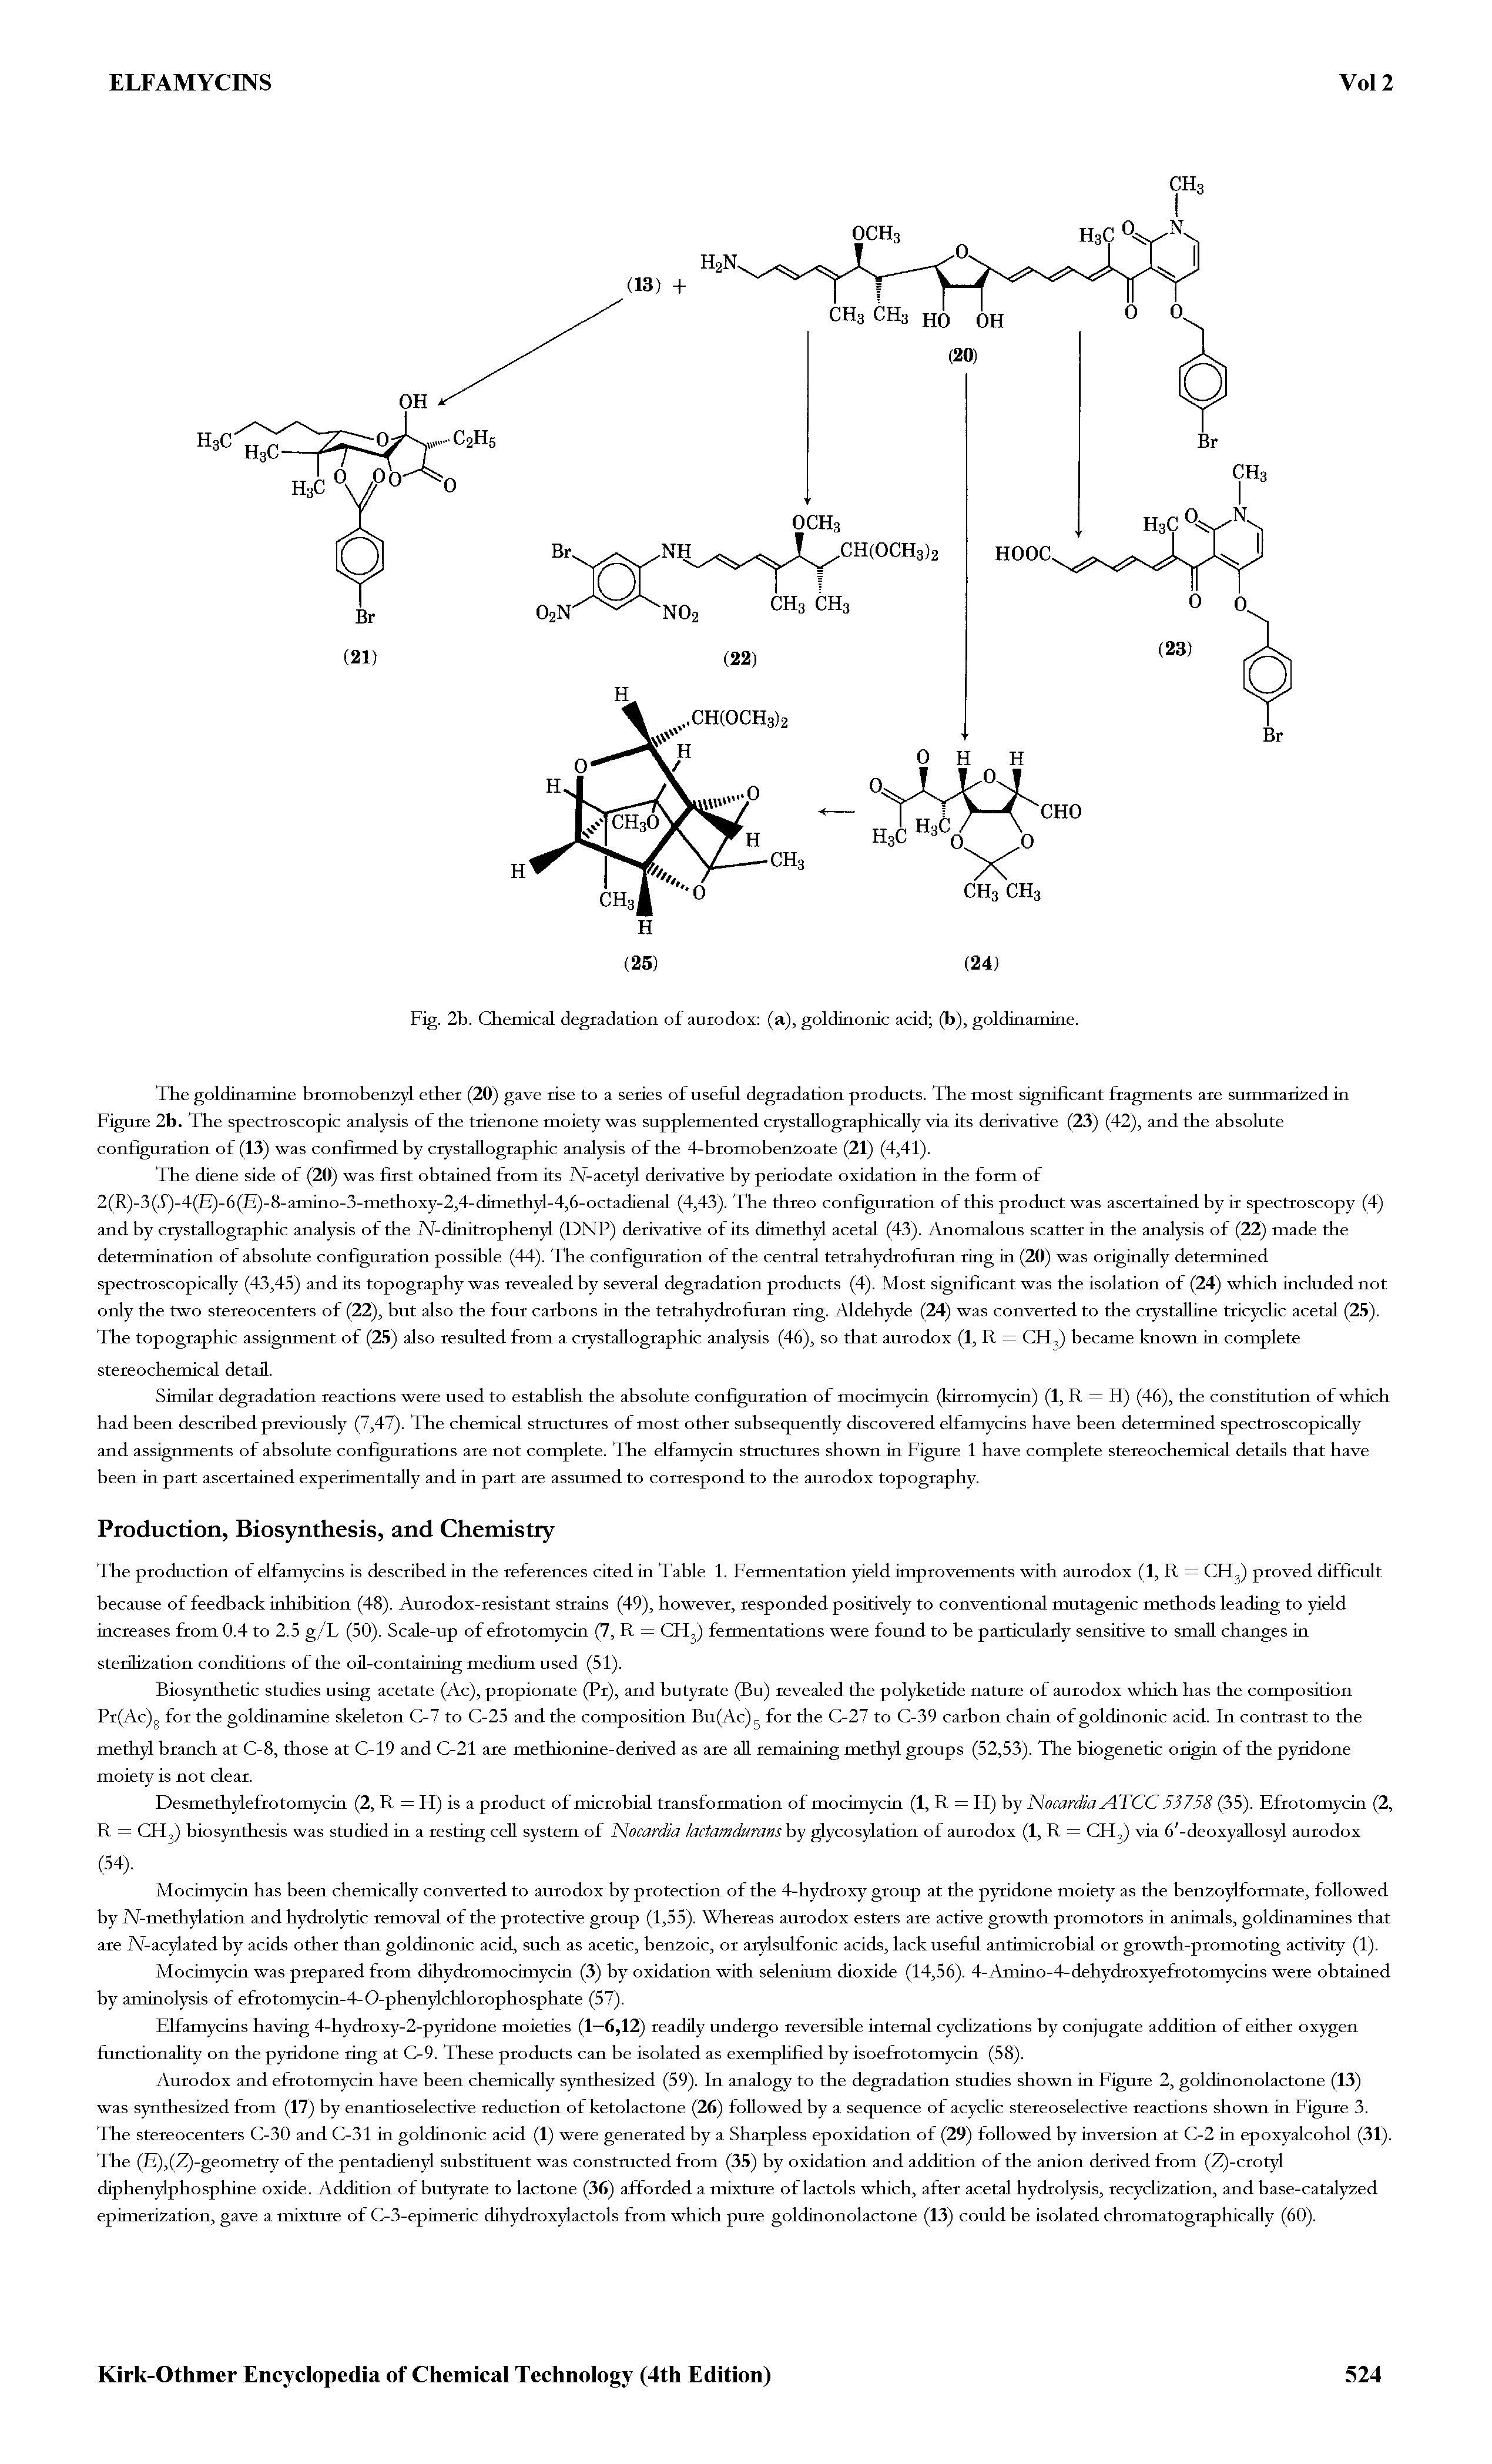 Fig. 2b. Chemical degradation of aurodox (a), goldinonic acid (b), goldinamine.